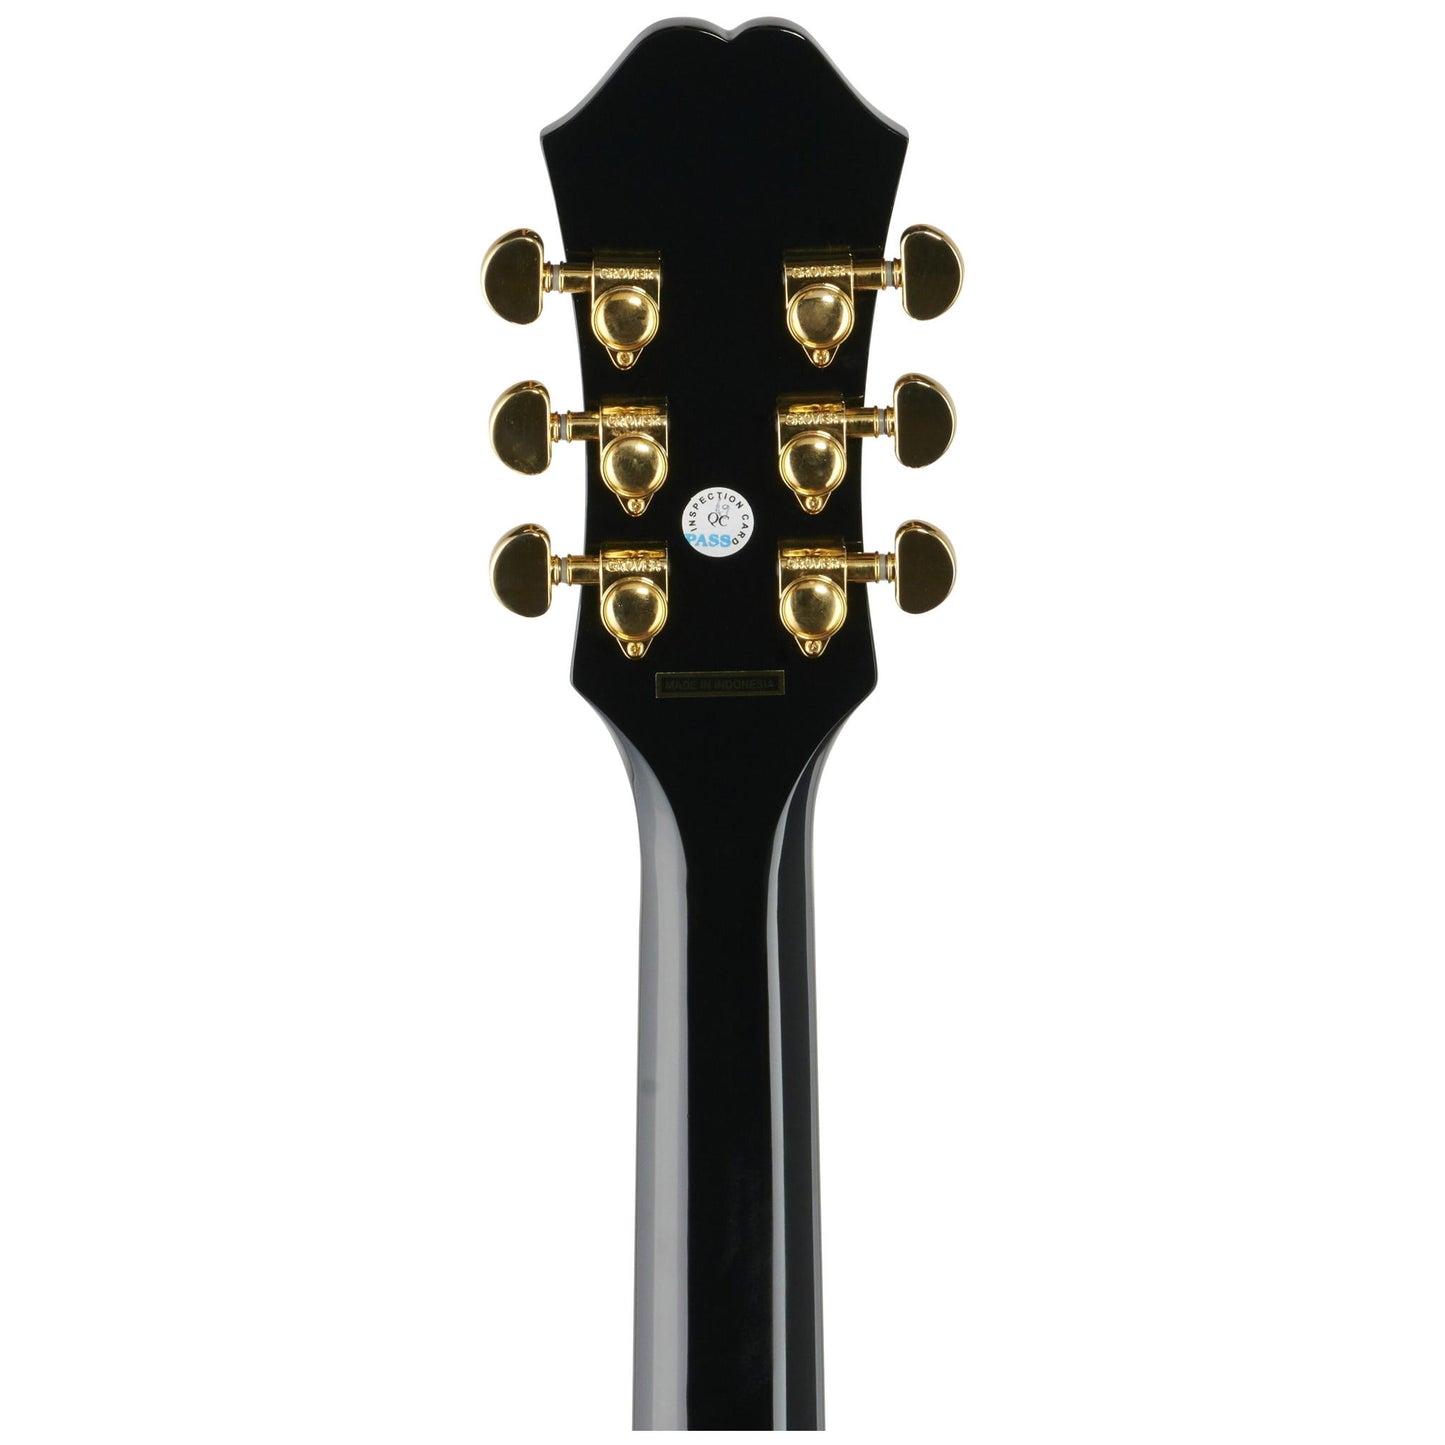 Epiphone J-200 EC Studio Acoustic-Electric Guitar, Black